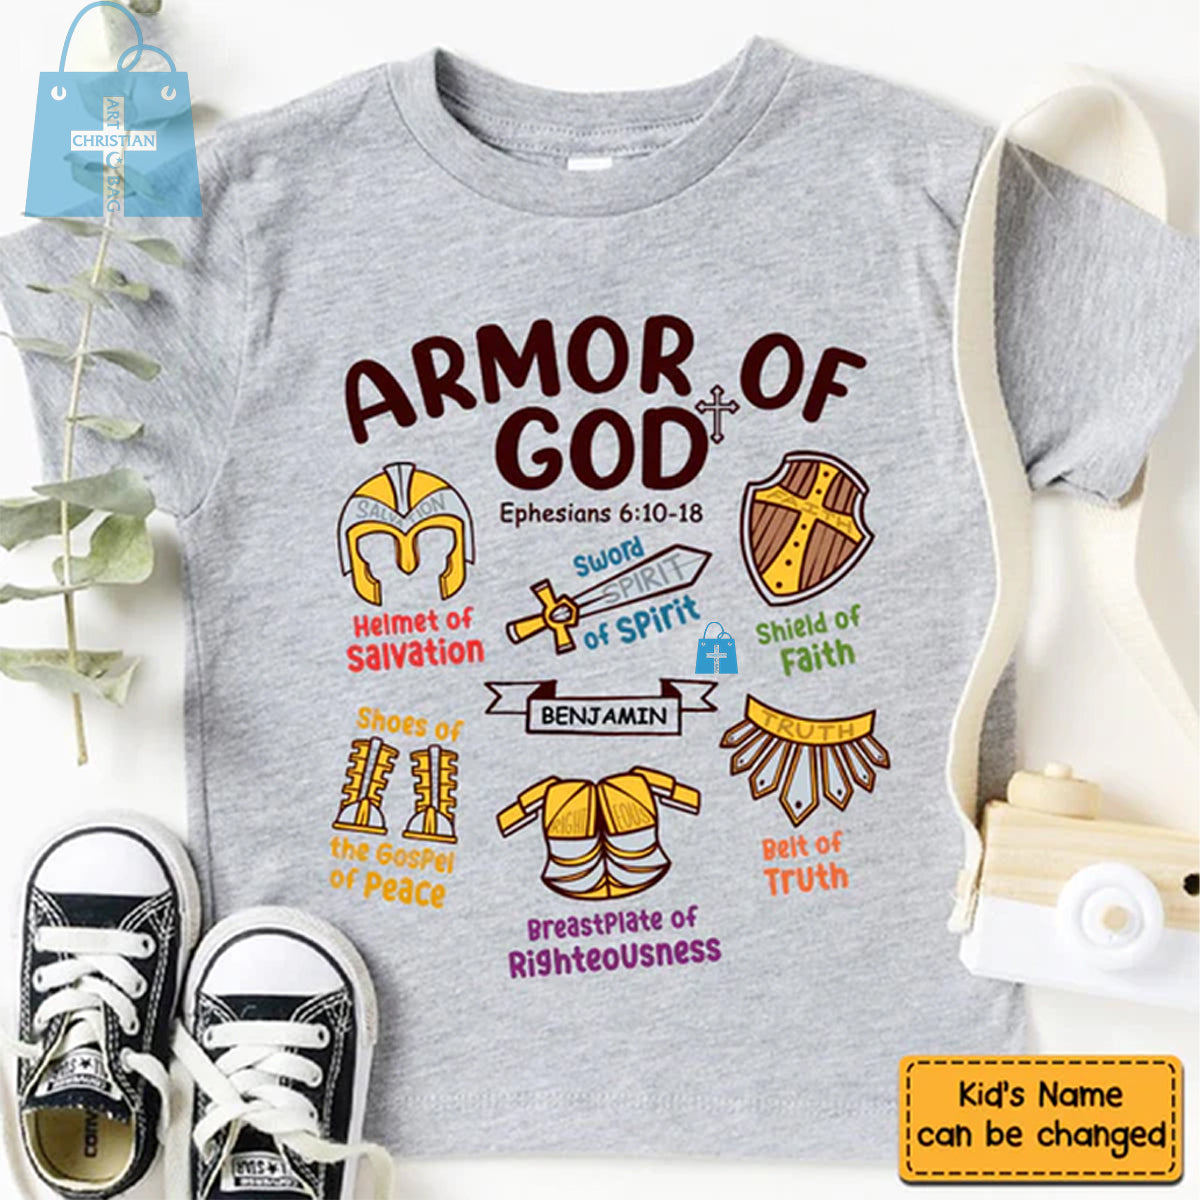 Christianartbag T-shirt, Armor Of God Letter Print T-Shirt, Children's Printed T-Shirts, CABTK01200923. - Christian Art Bag